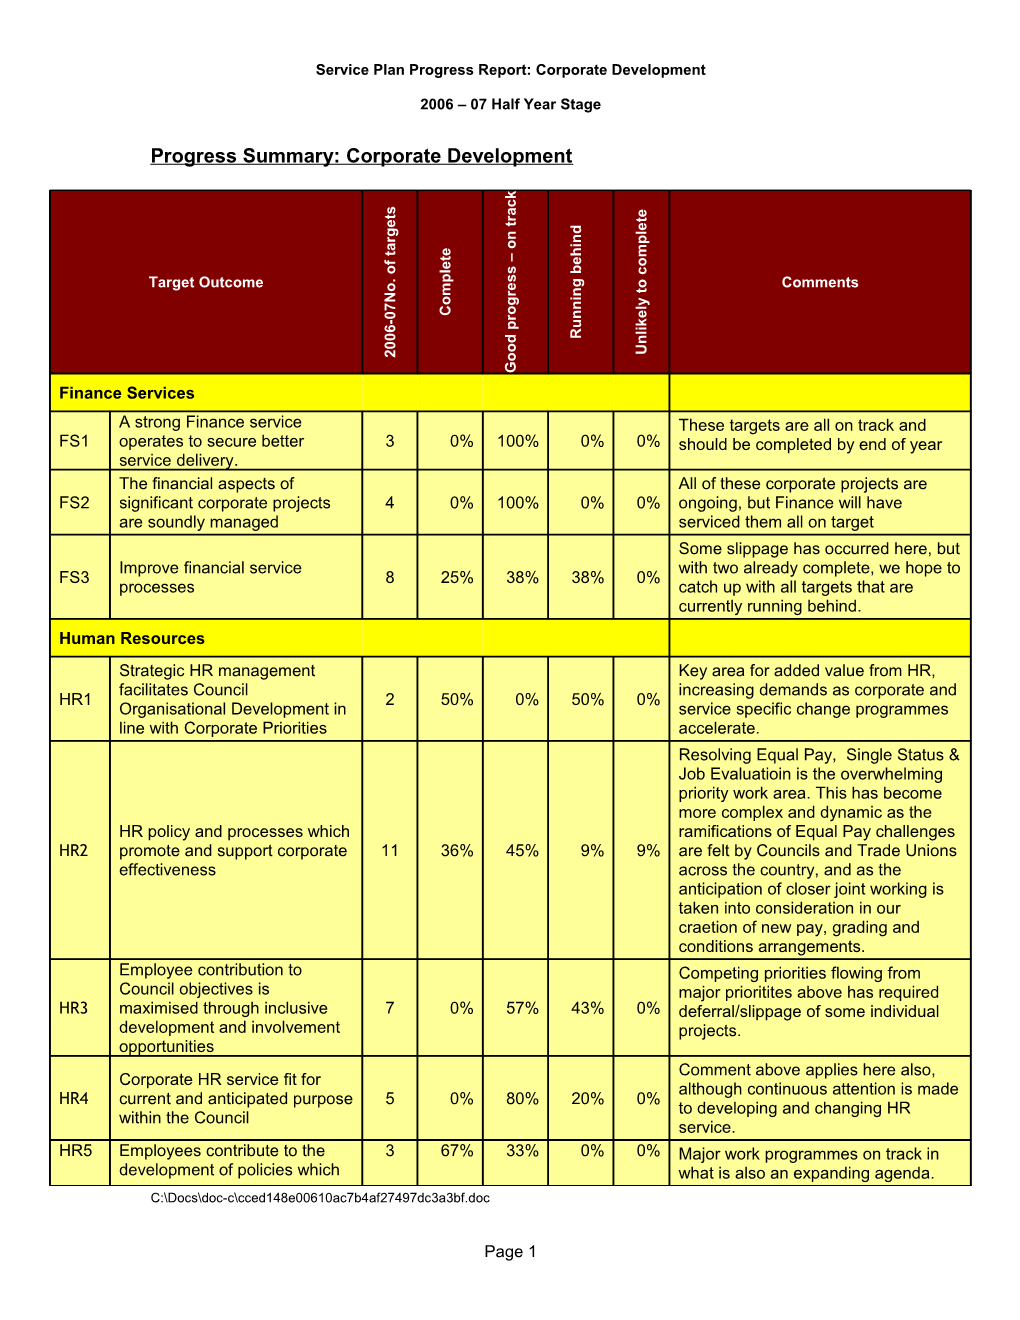 Service Plans Progress Reports : 2007-07, Half Year Stage